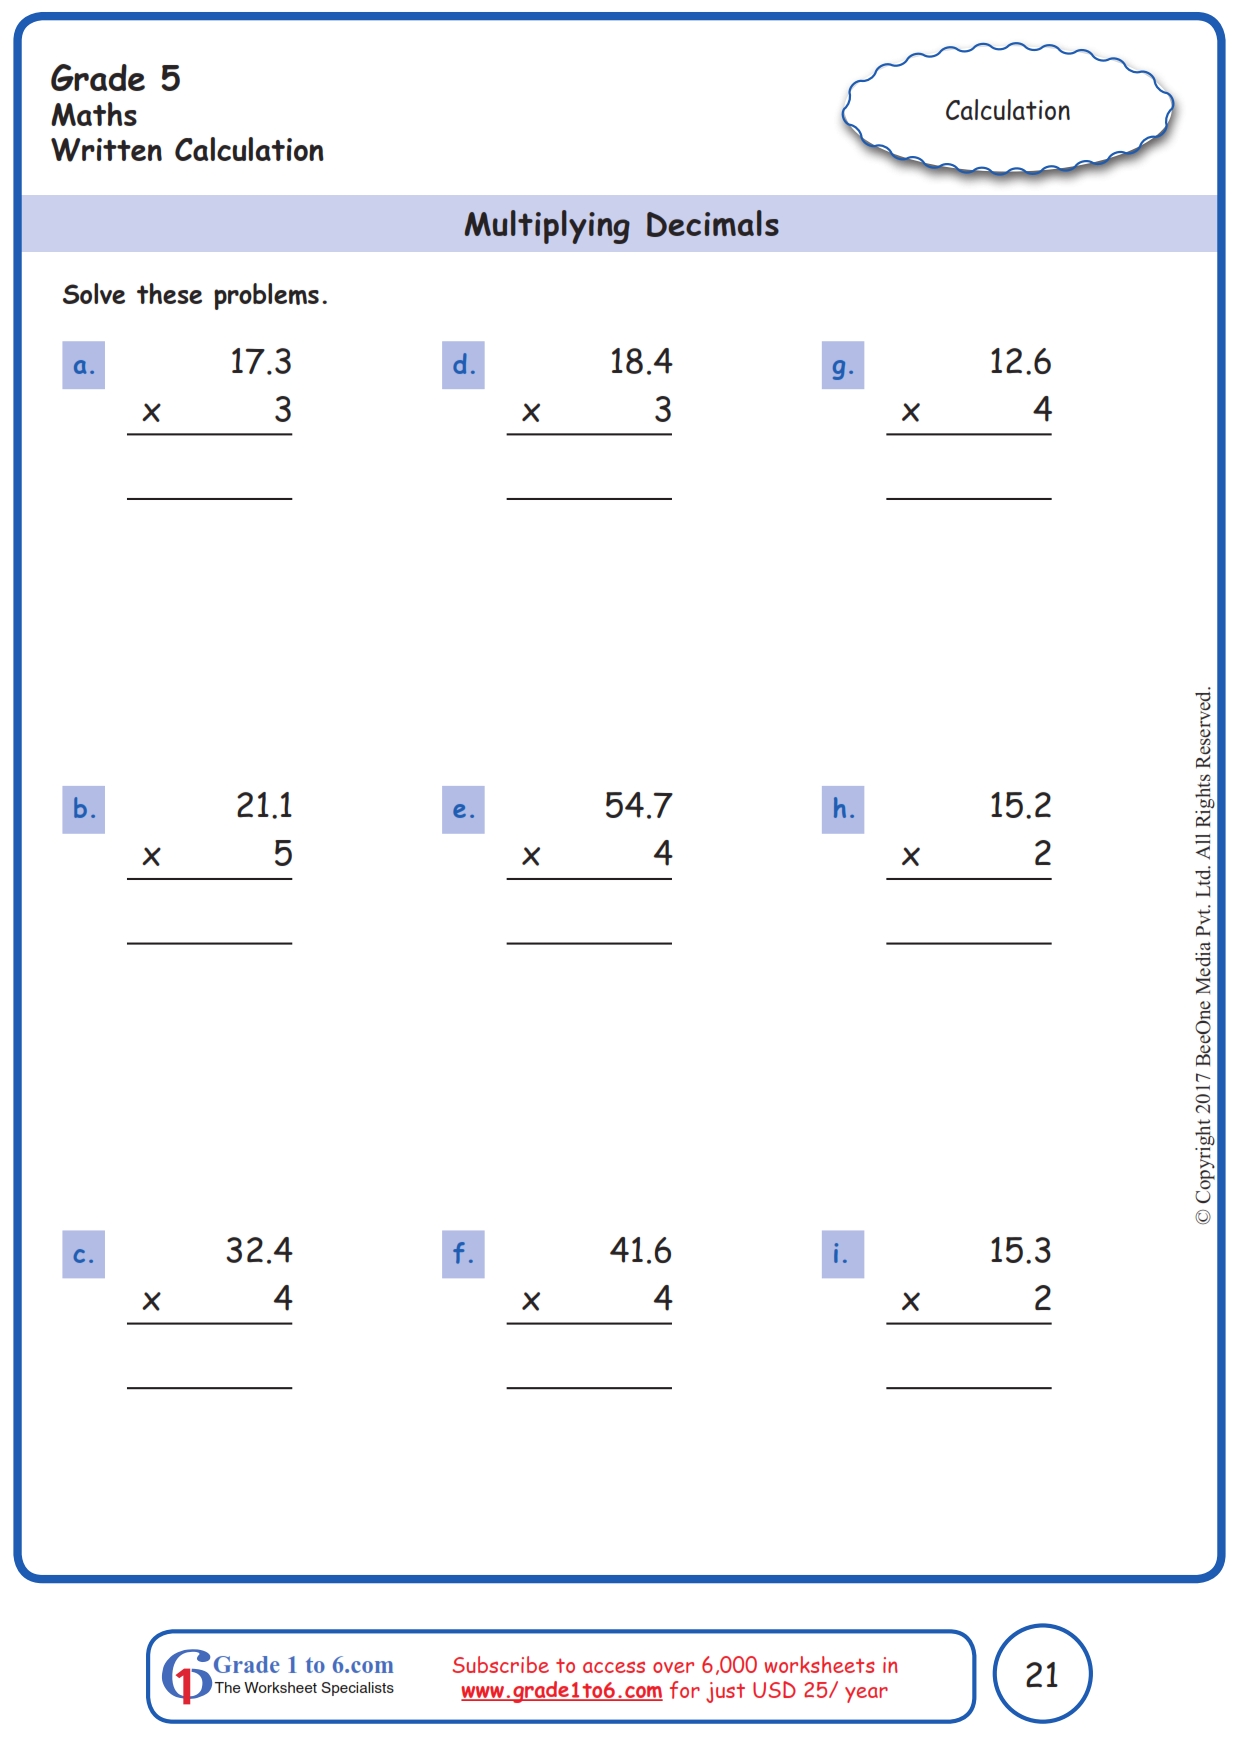 multiplication of decimals worksheets www grade1to6 com